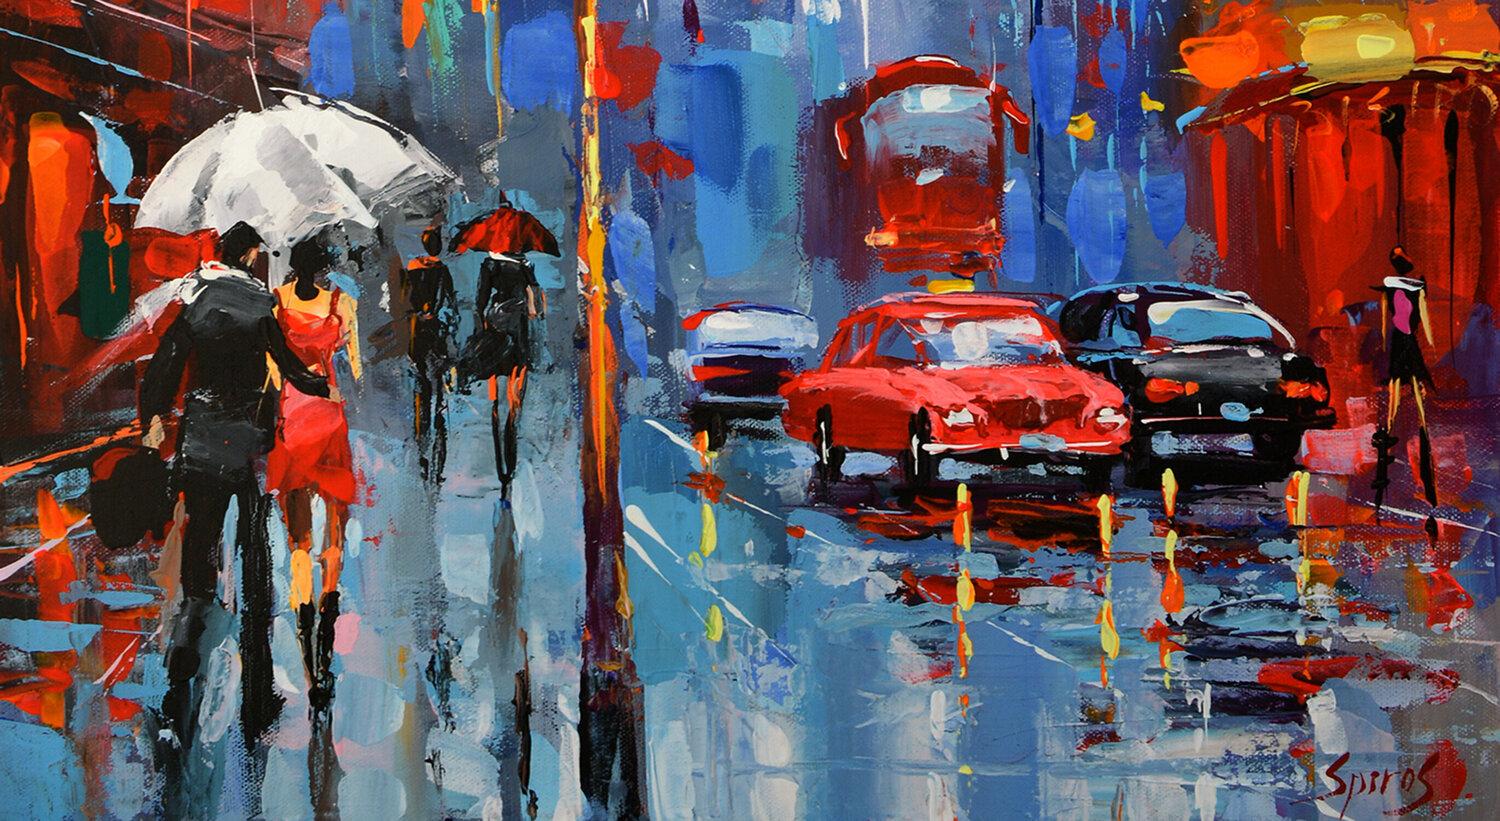 Parisian rains - Painting by Dmitry Spiros